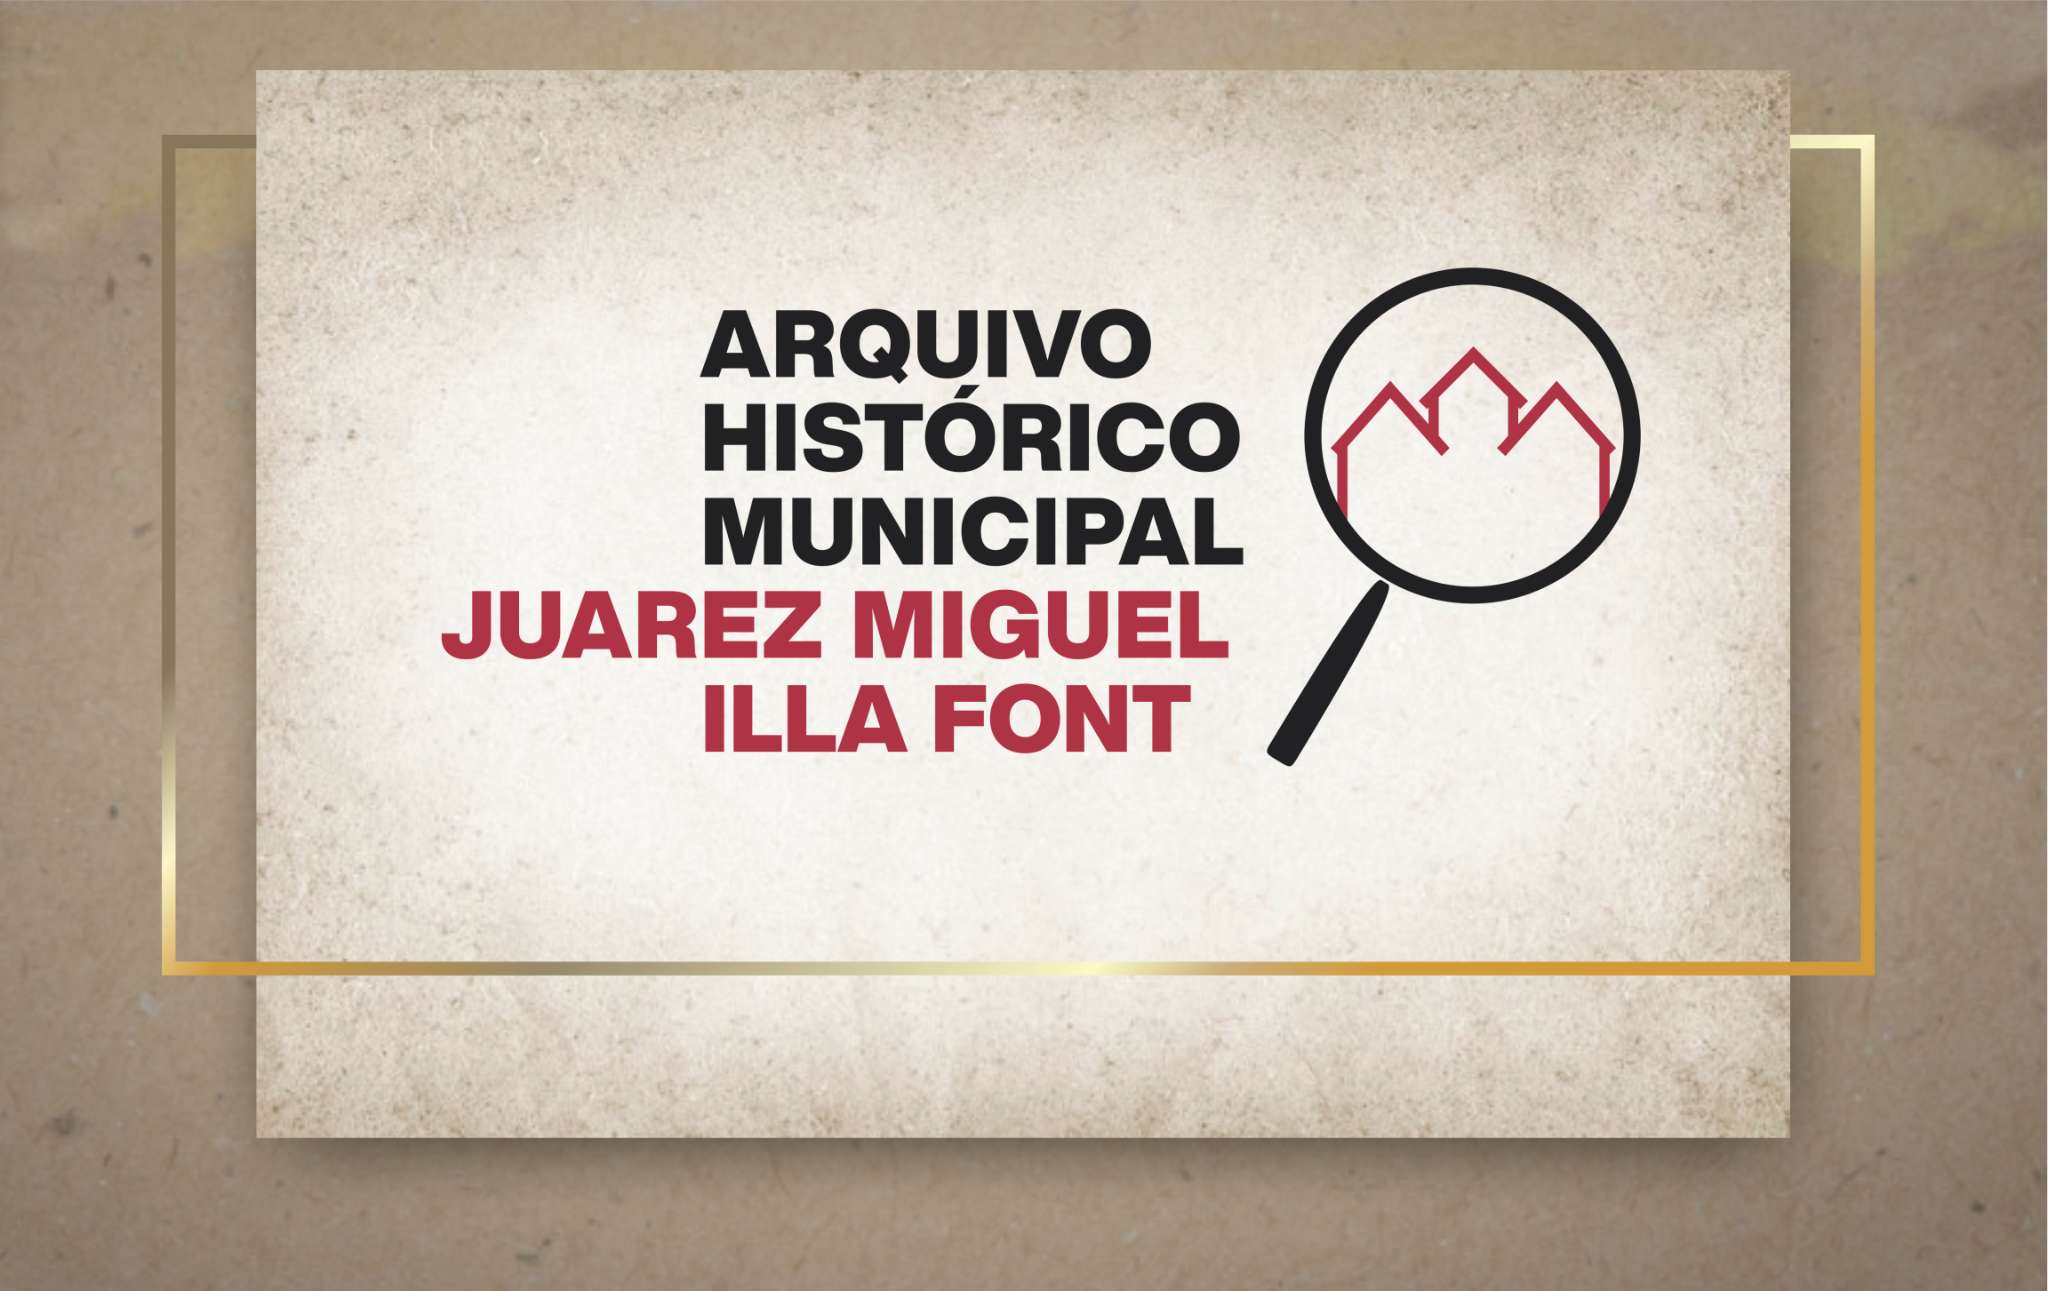  Conhe?a o novo logotipo do Arquivo Hist?rico Juarez Miguel Illa Font criado pelo estudante Pietro Zandavalli